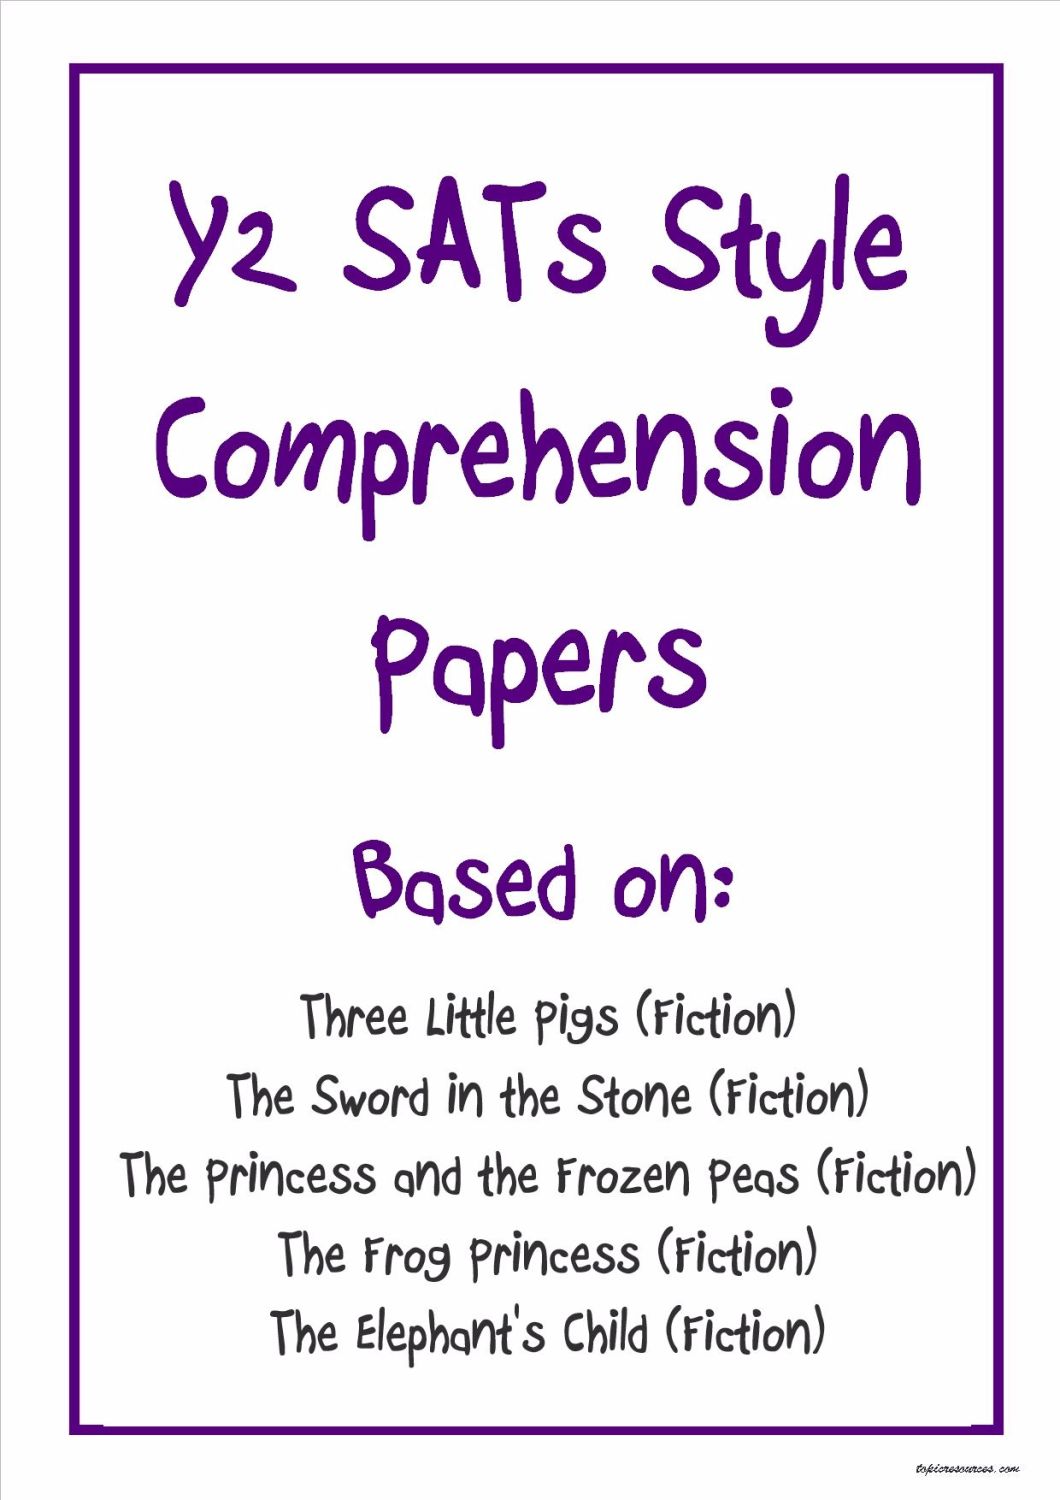 KS1 comprehension papers based on popular children's stories